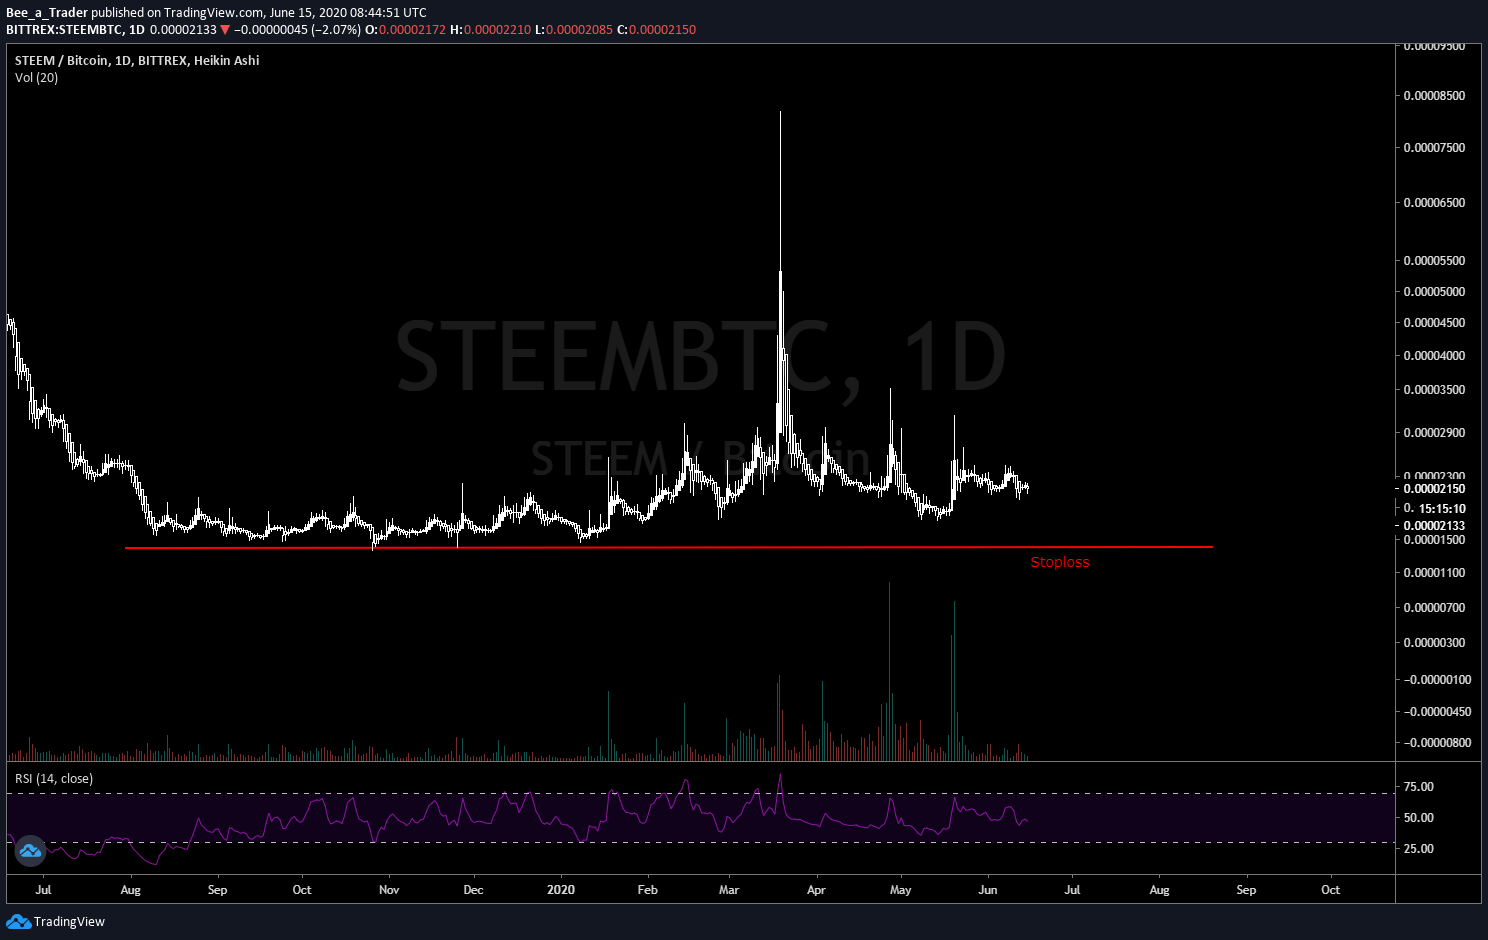 Steem/Btc, 1D timeframe